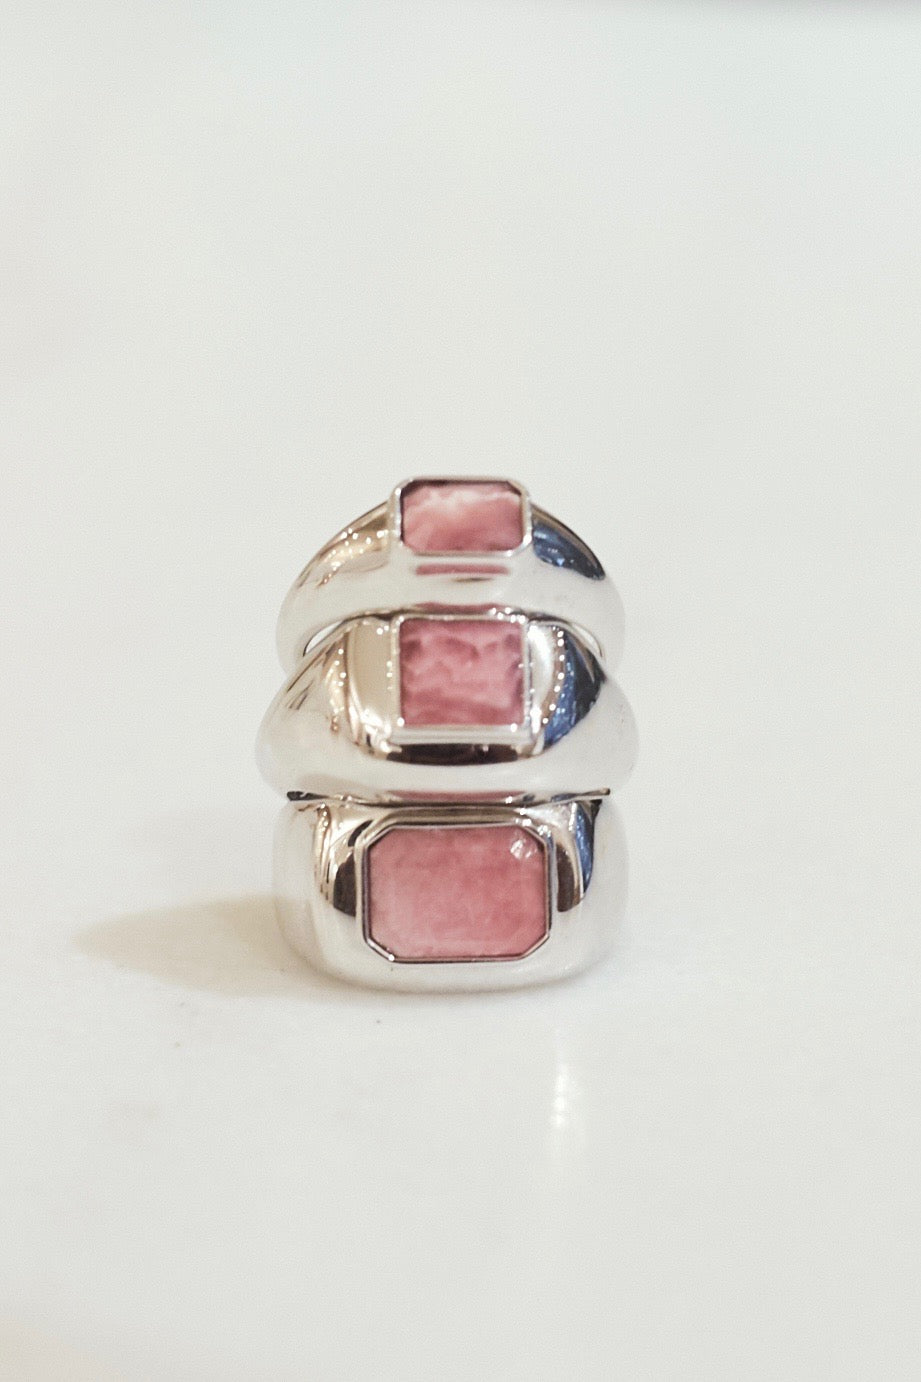 Medium Ring in 18k White Gold & Pink Marble Stone